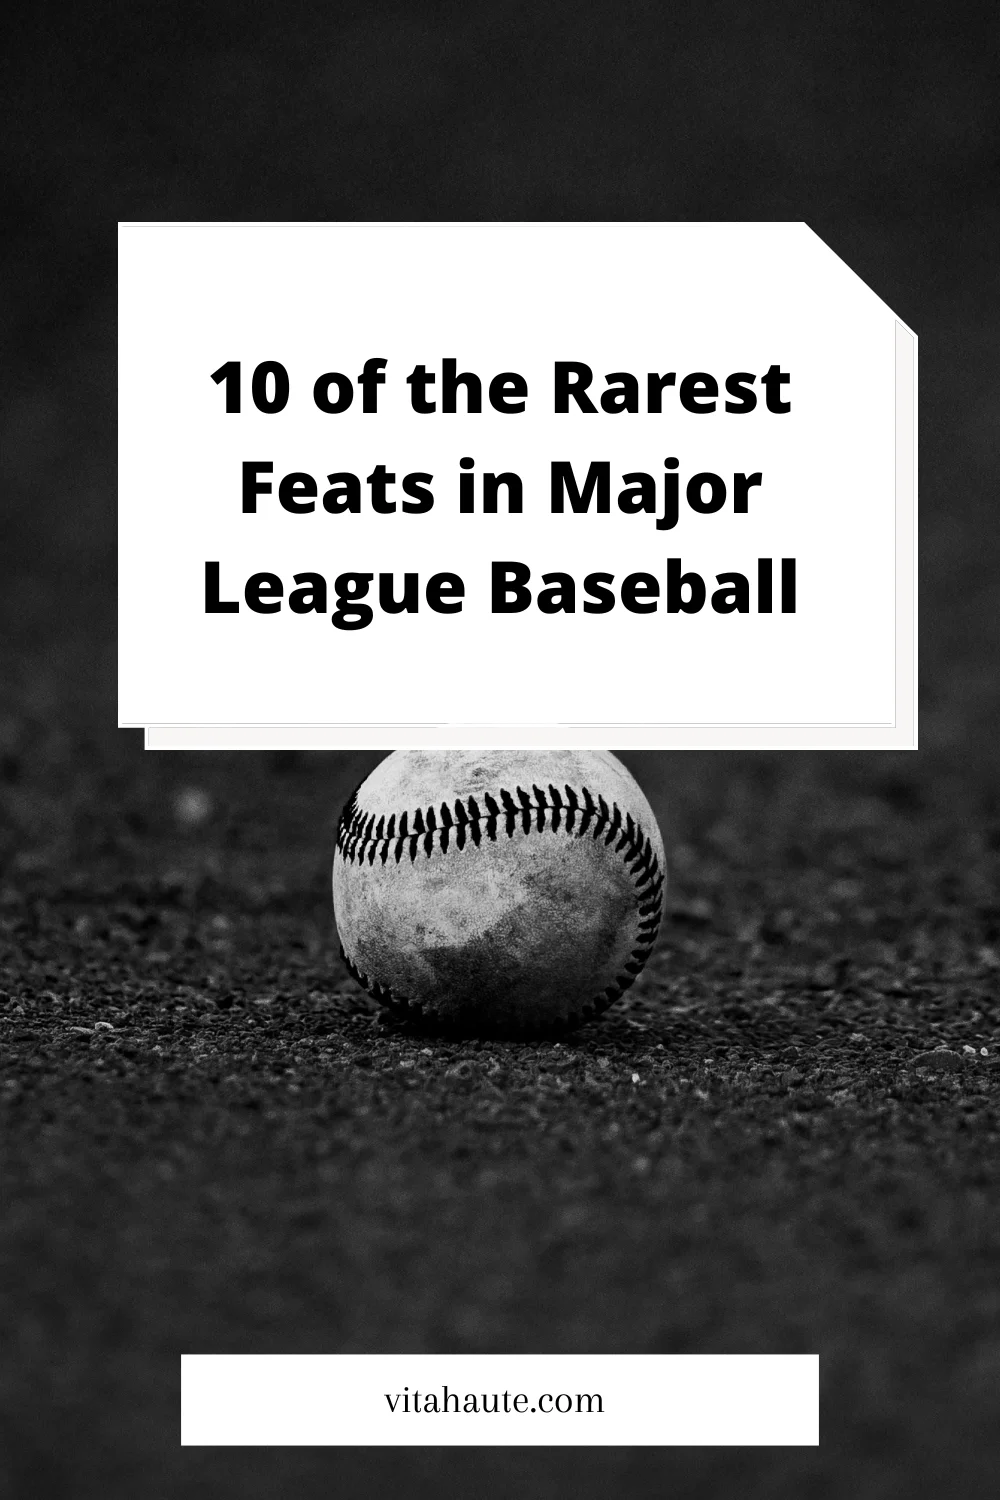 A collage of rare feats in Major League Baseball